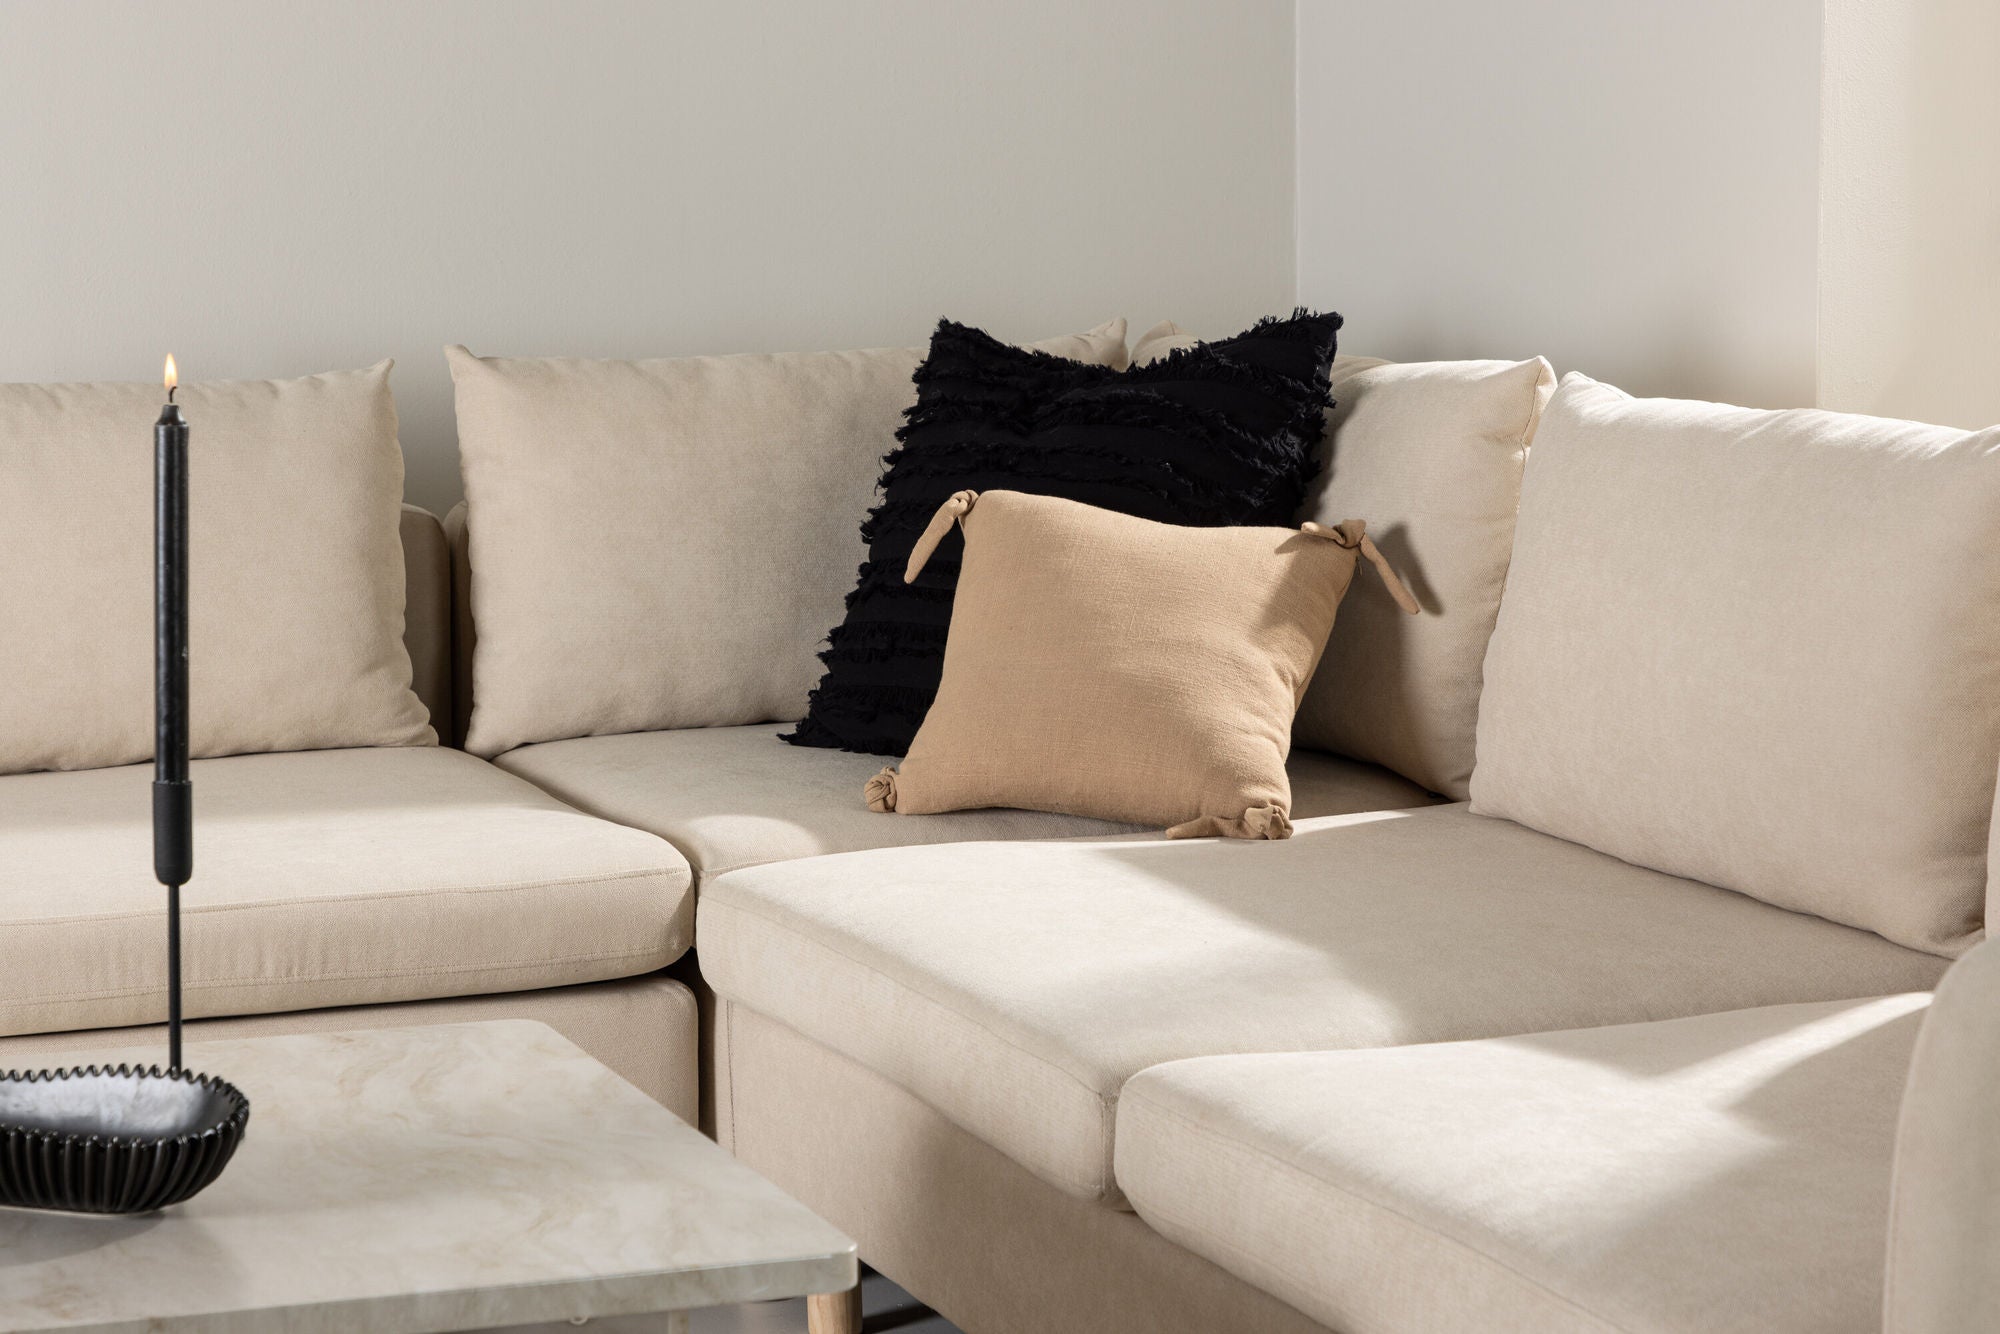 Venture Home Zero Corner Sofa - Woodlook / Beige Fabric - vivahabitat.com